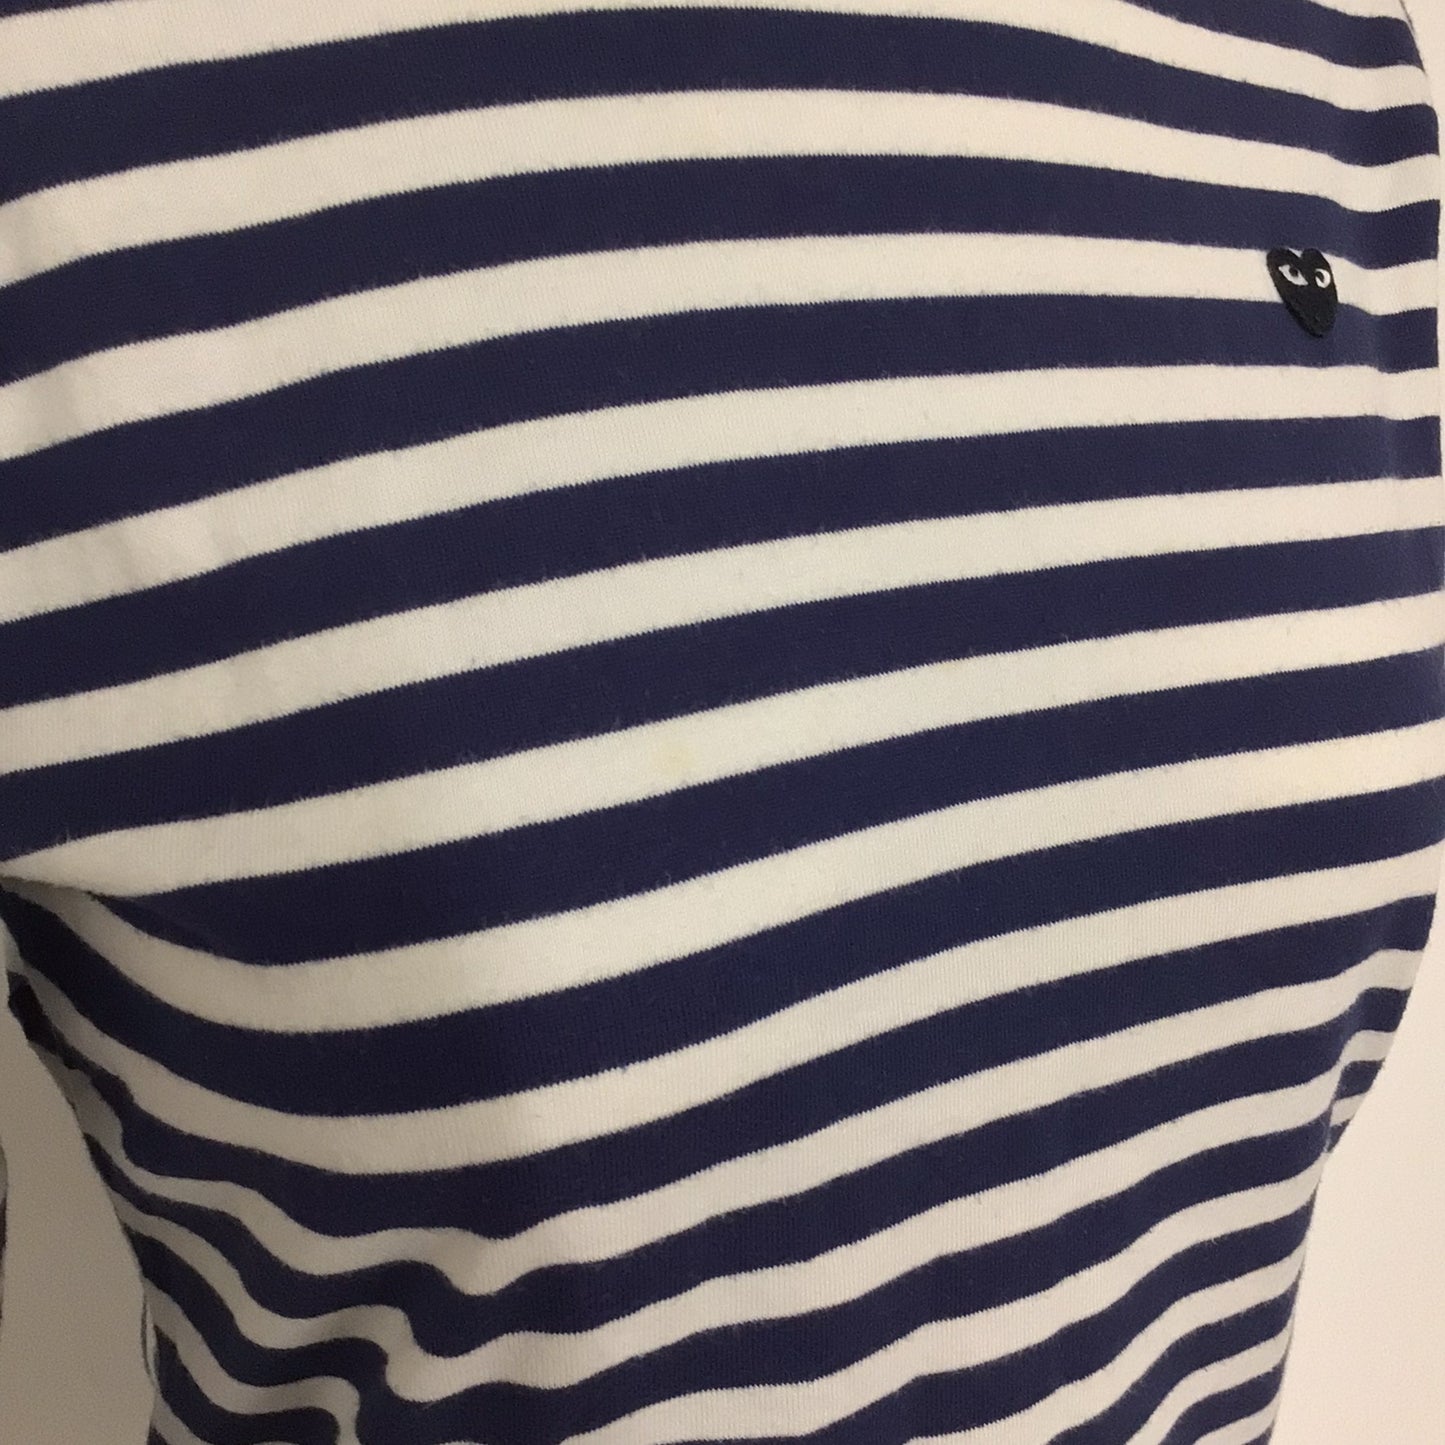 Comme des Garçons PLAY Blue & White Striped Long Sleeved Top 100% Cotton Size S